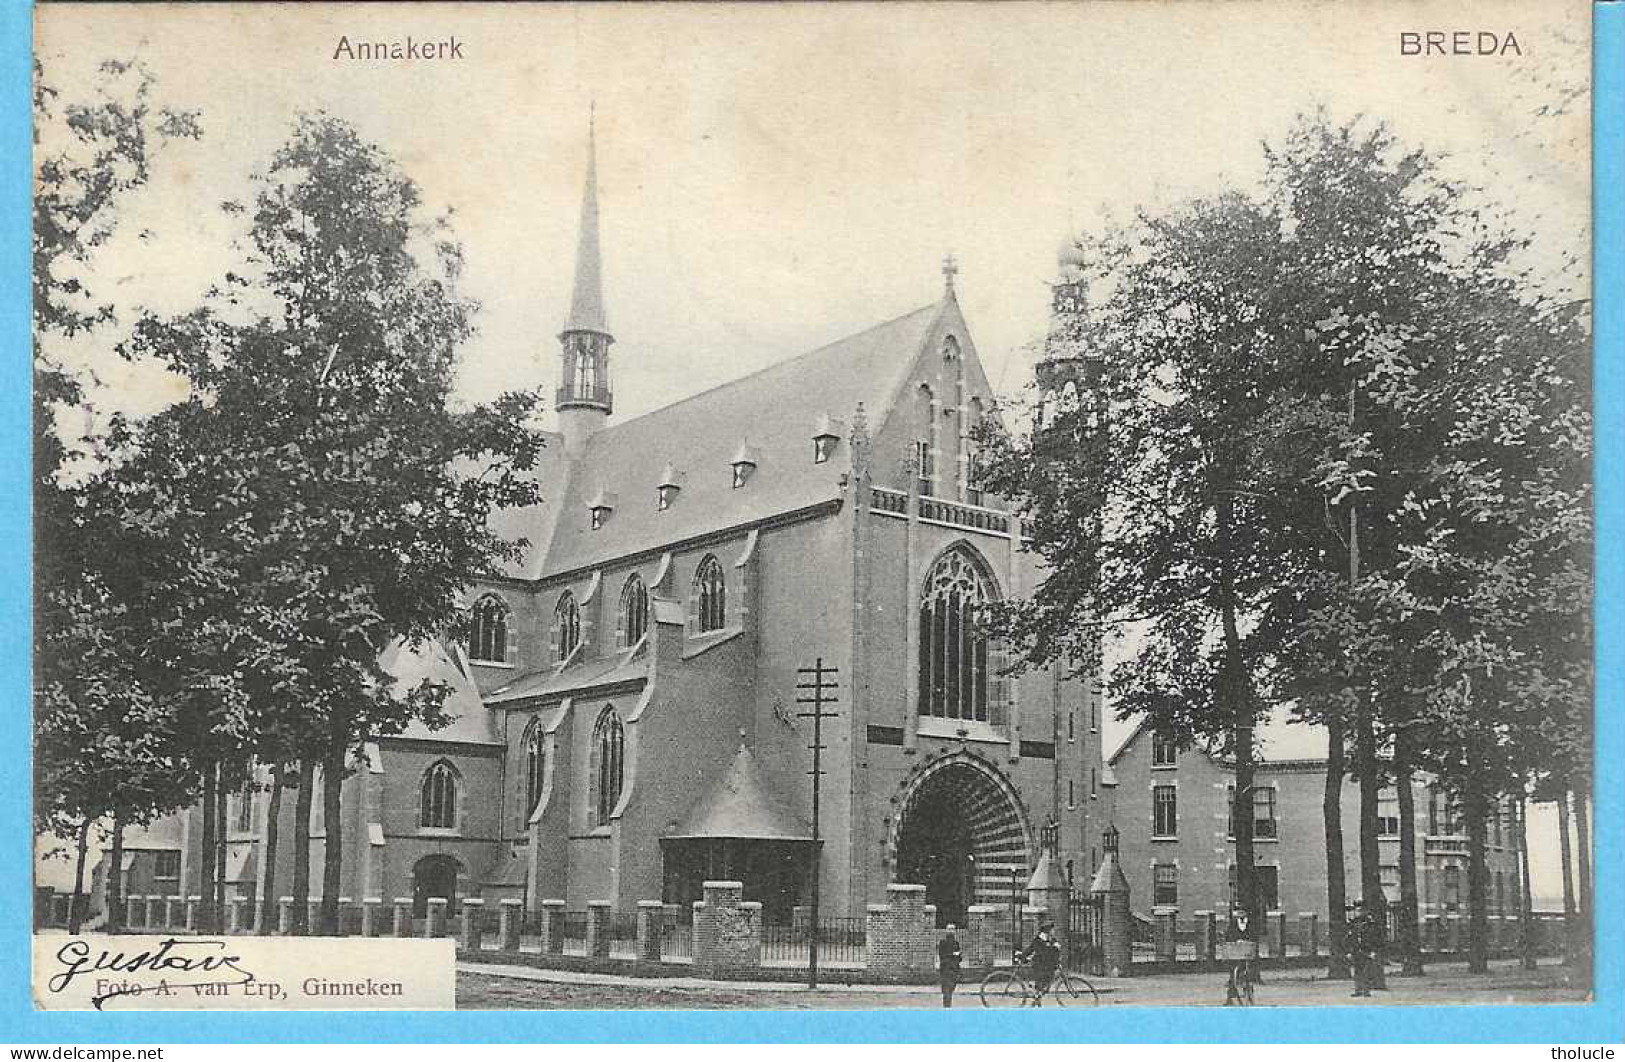 Breda (Noord-Brabant)-Annakerk-Foto A.van Erp, Ginneken-rare - Breda